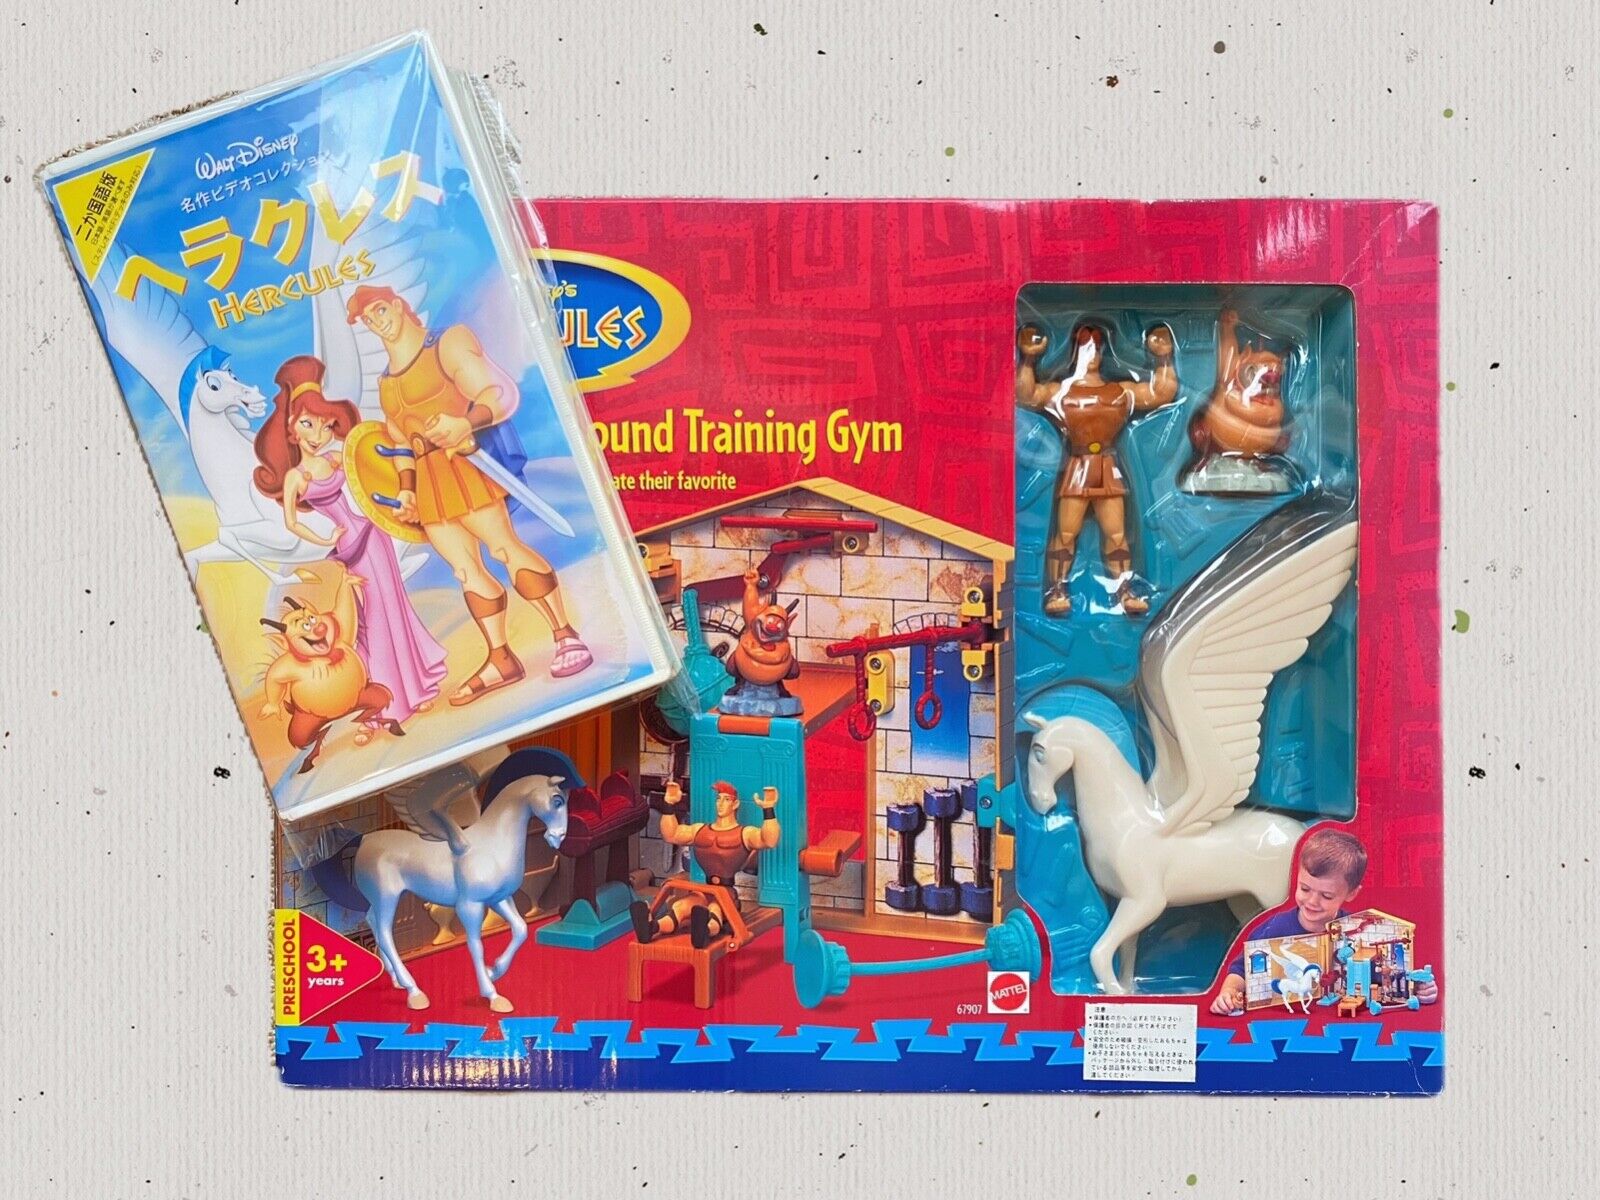 Disney 1997 Hercules carry around training gym Mattel vintage play set with DVD